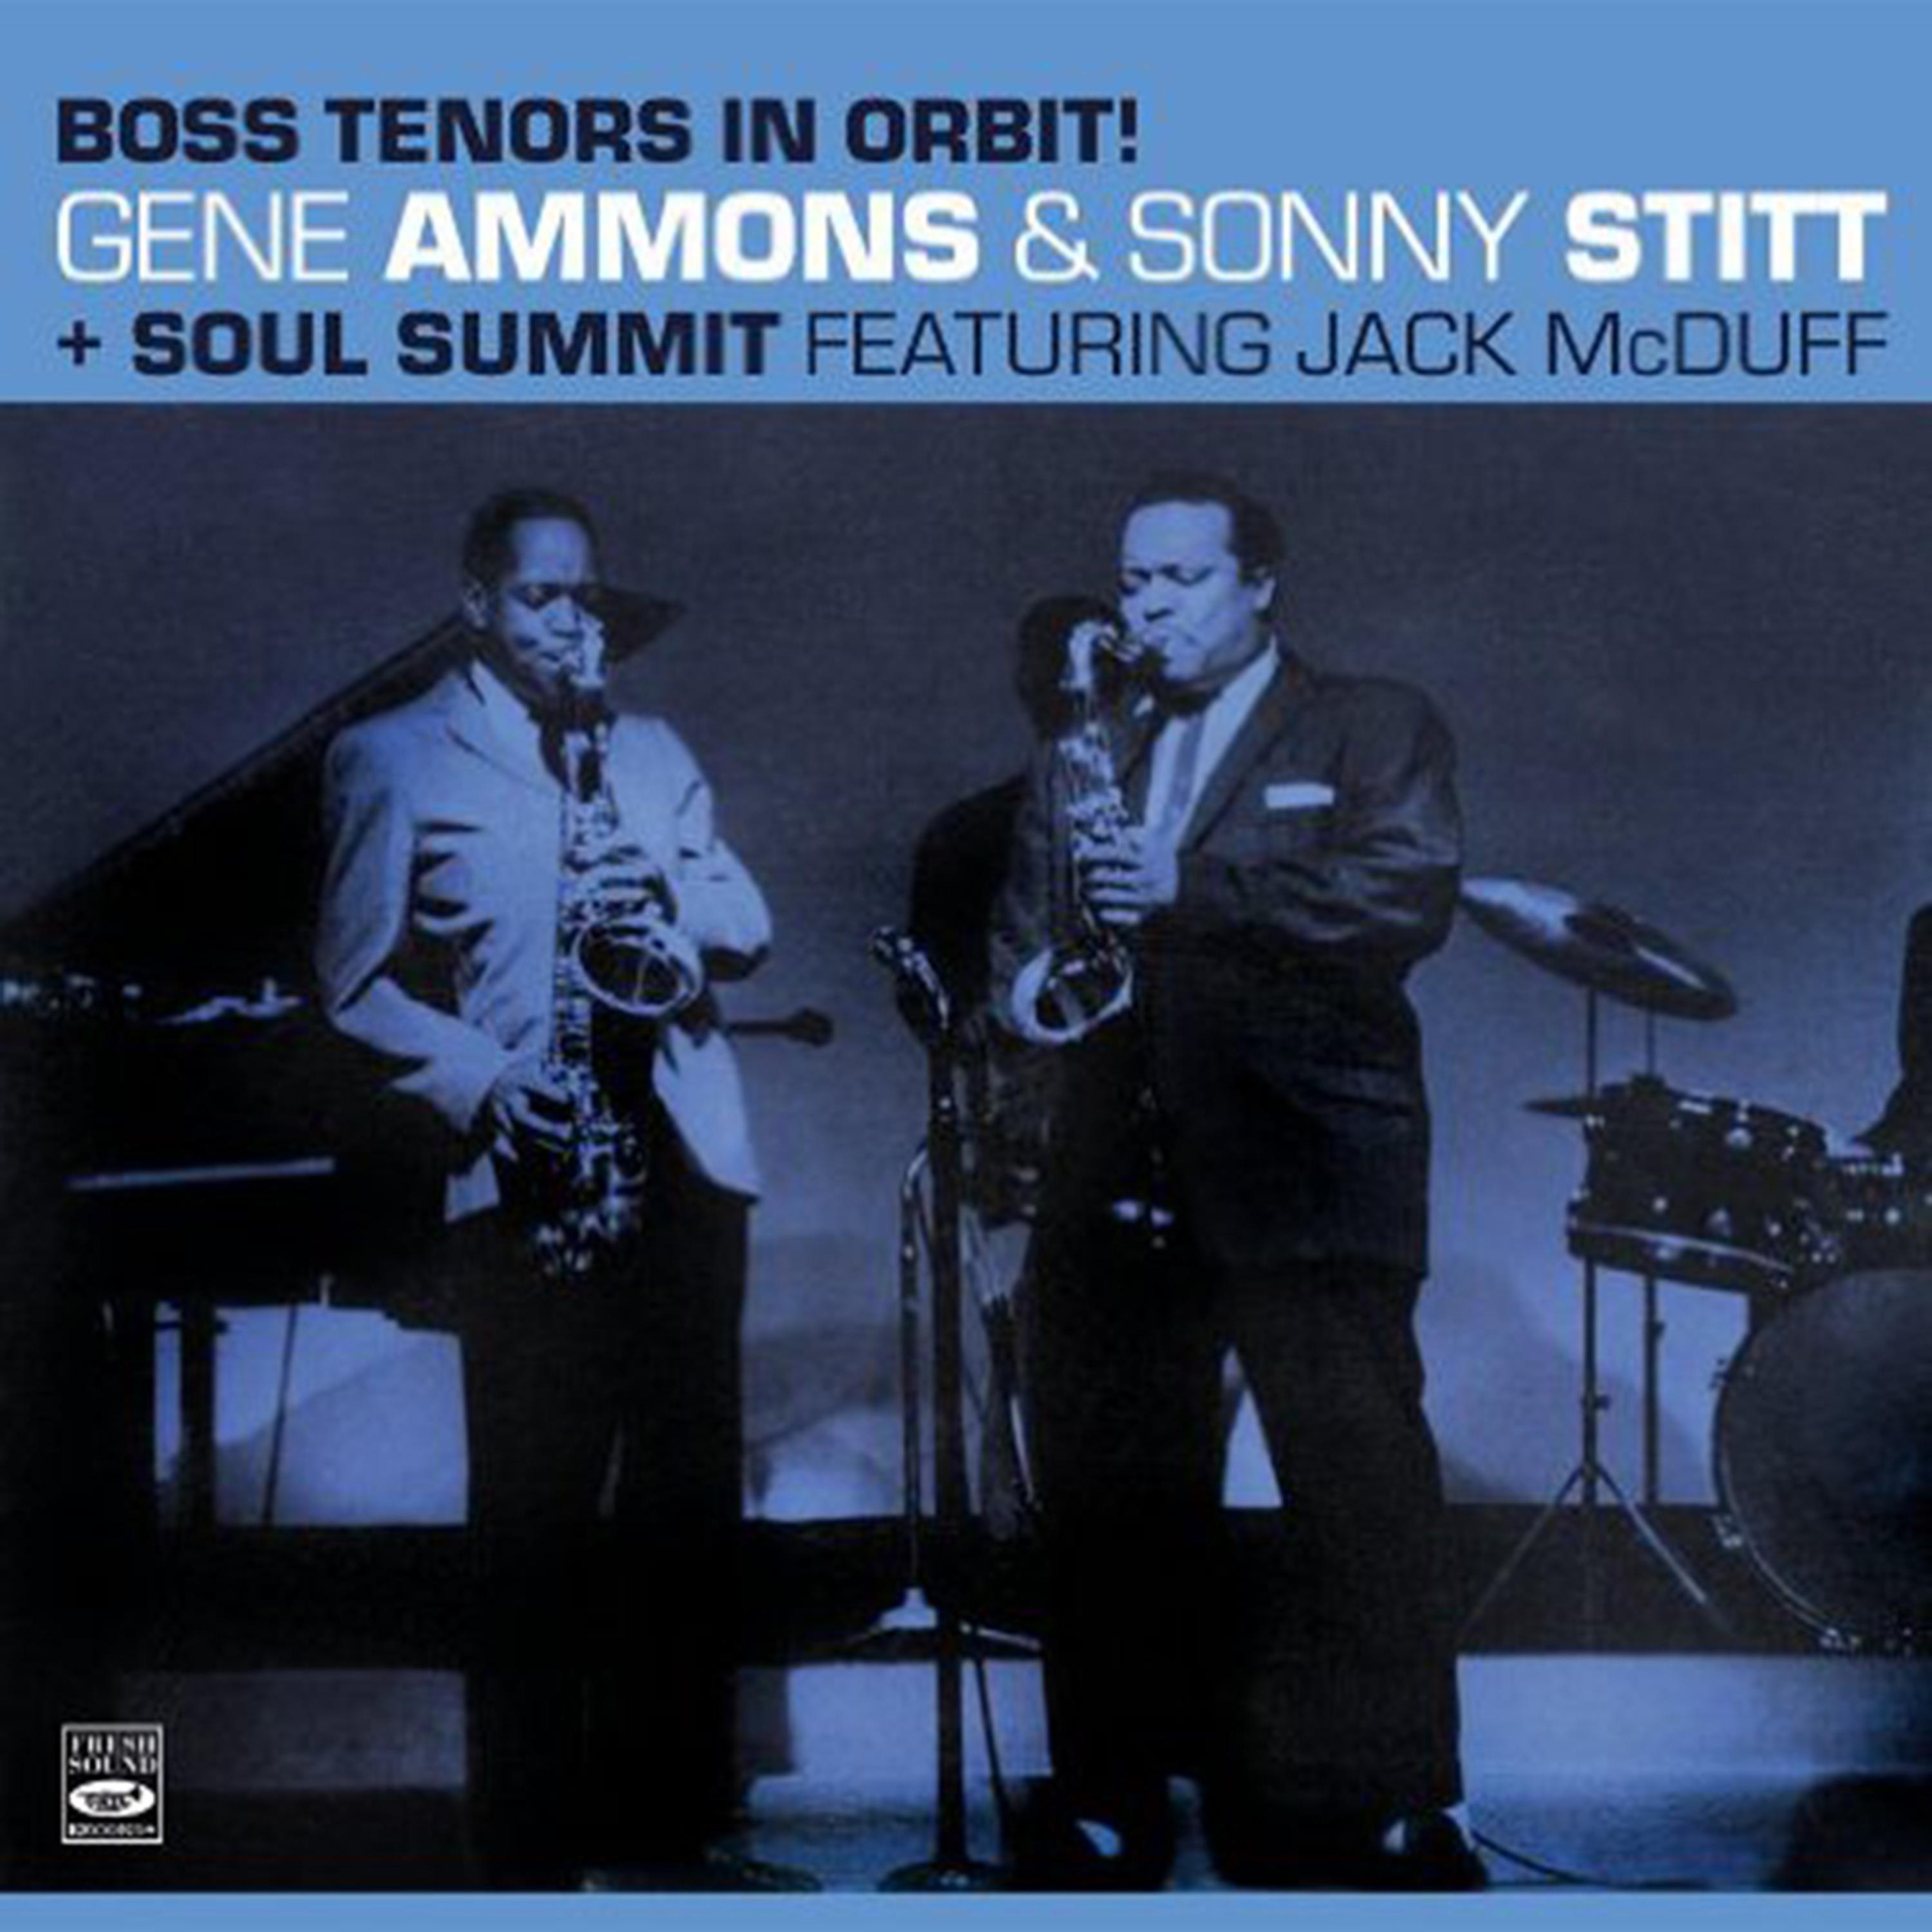 Постер альбома "Boss Tenors in Orbit!" Gene Ammons & Sonny Stitt "Soul Summit"